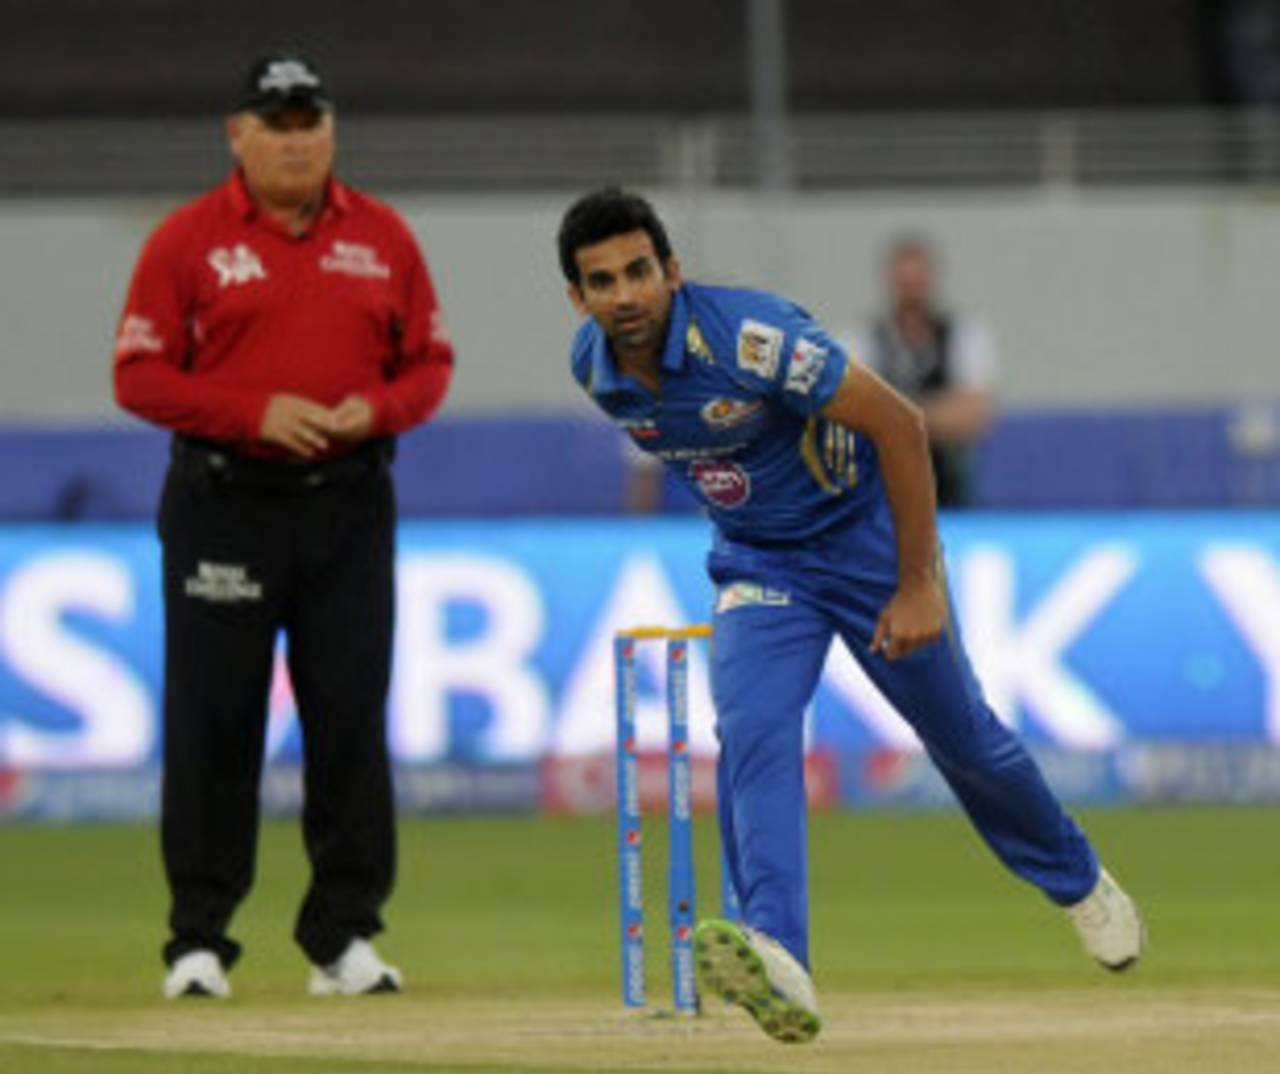 Zaheer Khan in his follow-through, Mumbai Indians v Sunrisers Hyderabad, IPL 2014, Dubai, April 30, 2014